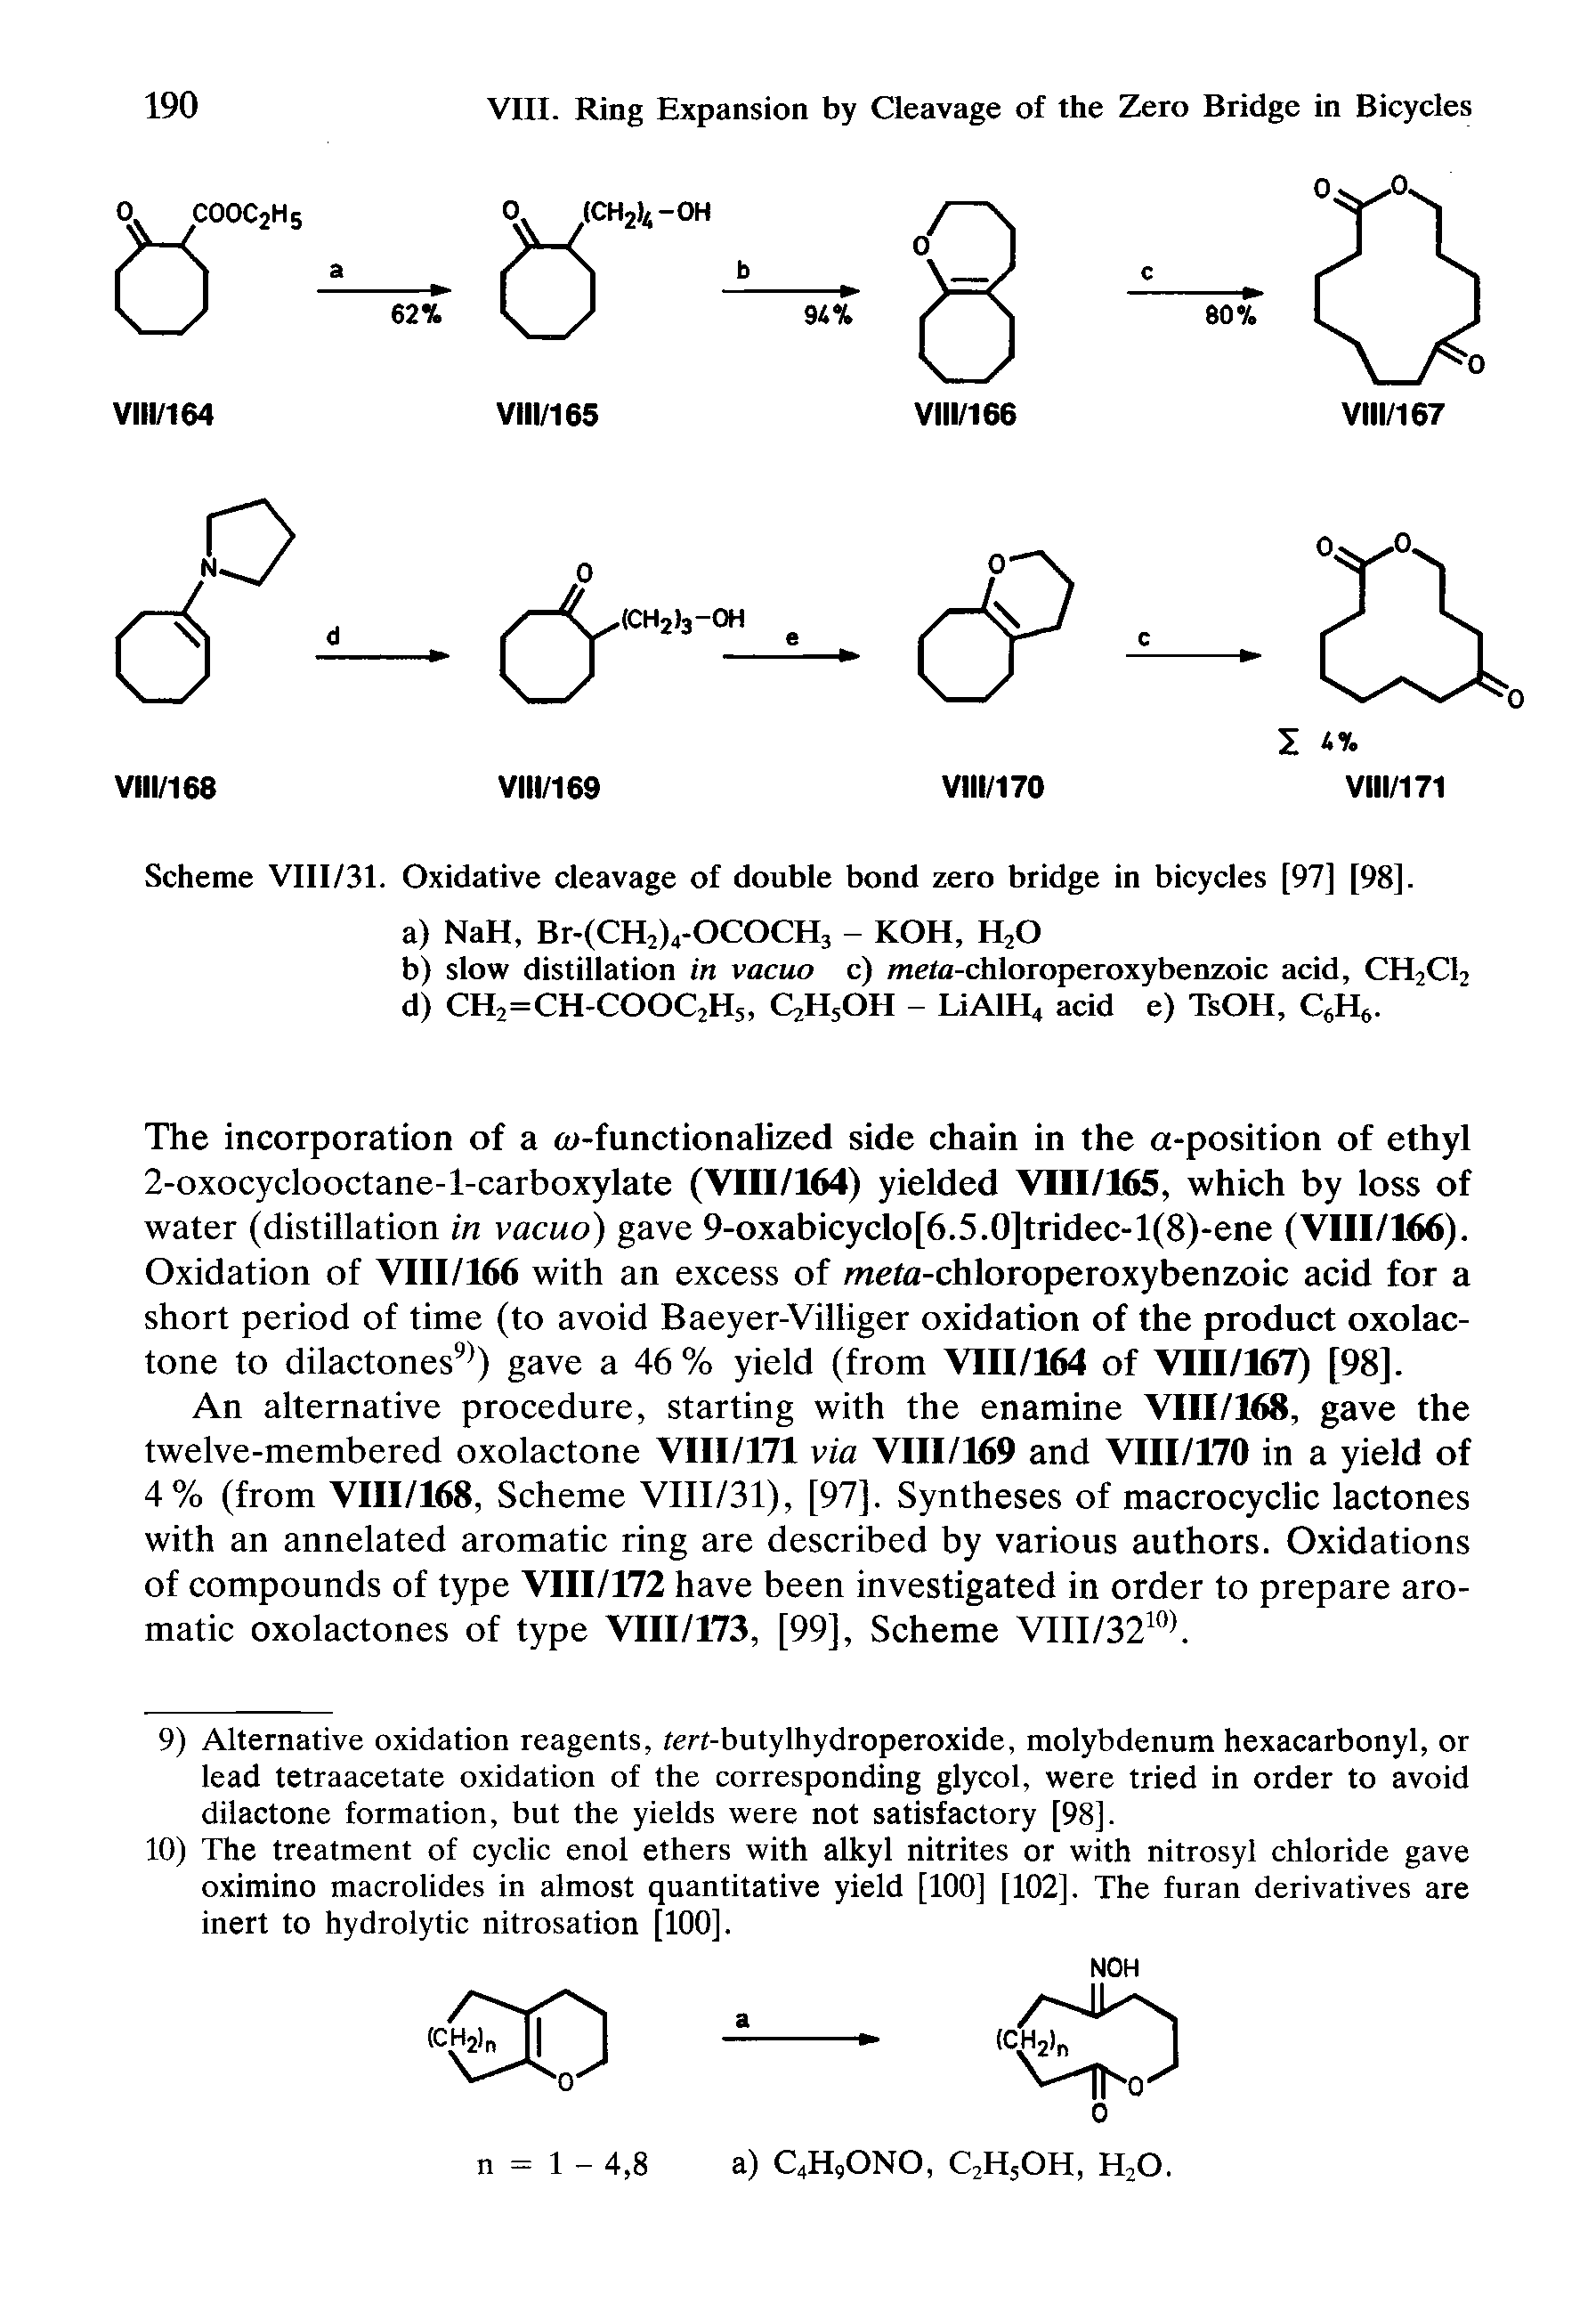 Scheme VIII/31. Oxidative cleavage of double bond zero bridge in bicycles [97] [98].